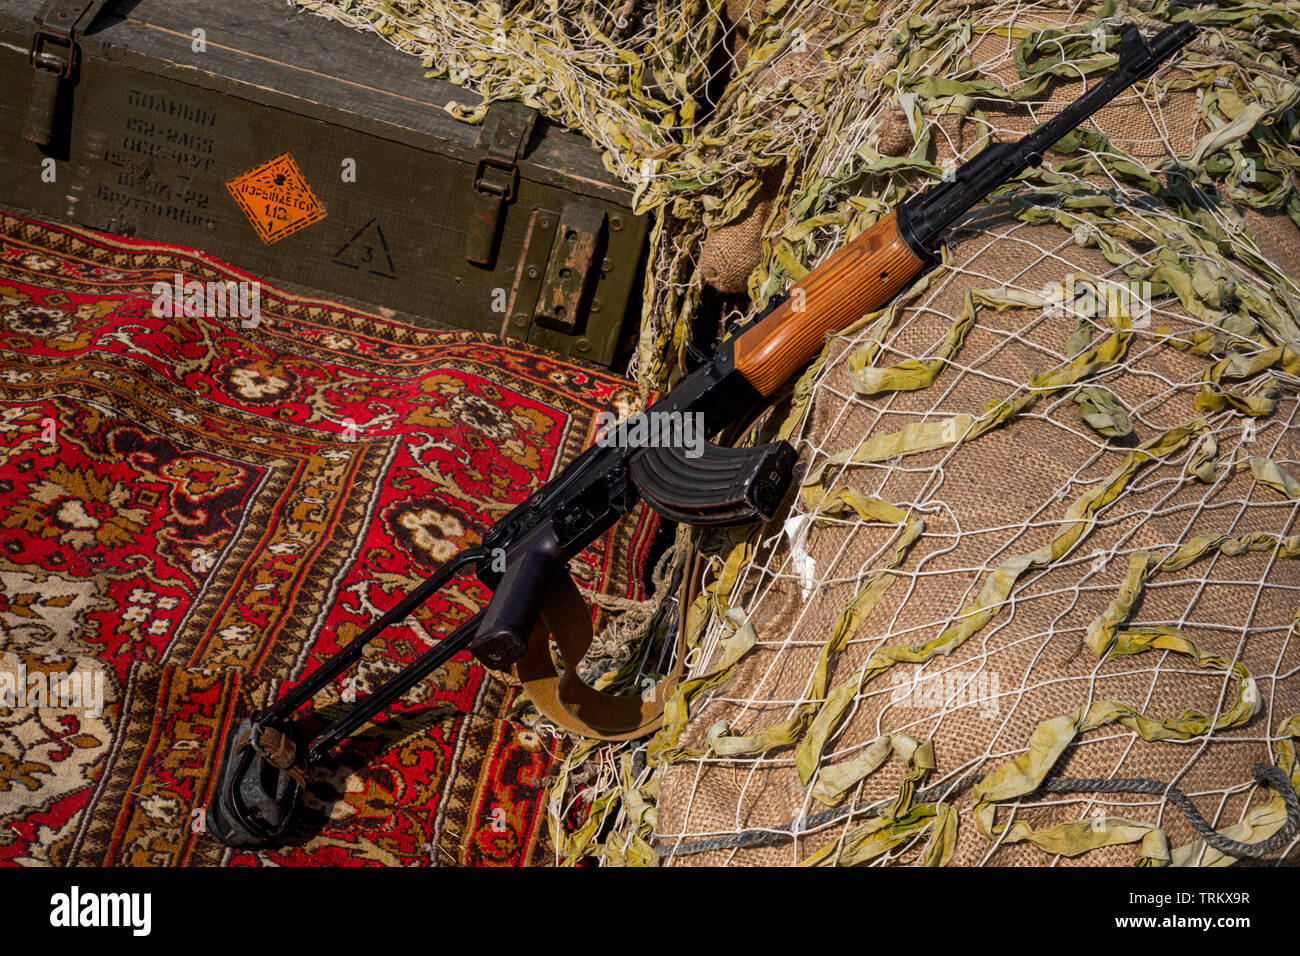 Kalashnikov rifle with a box of ammunition Stock Photo